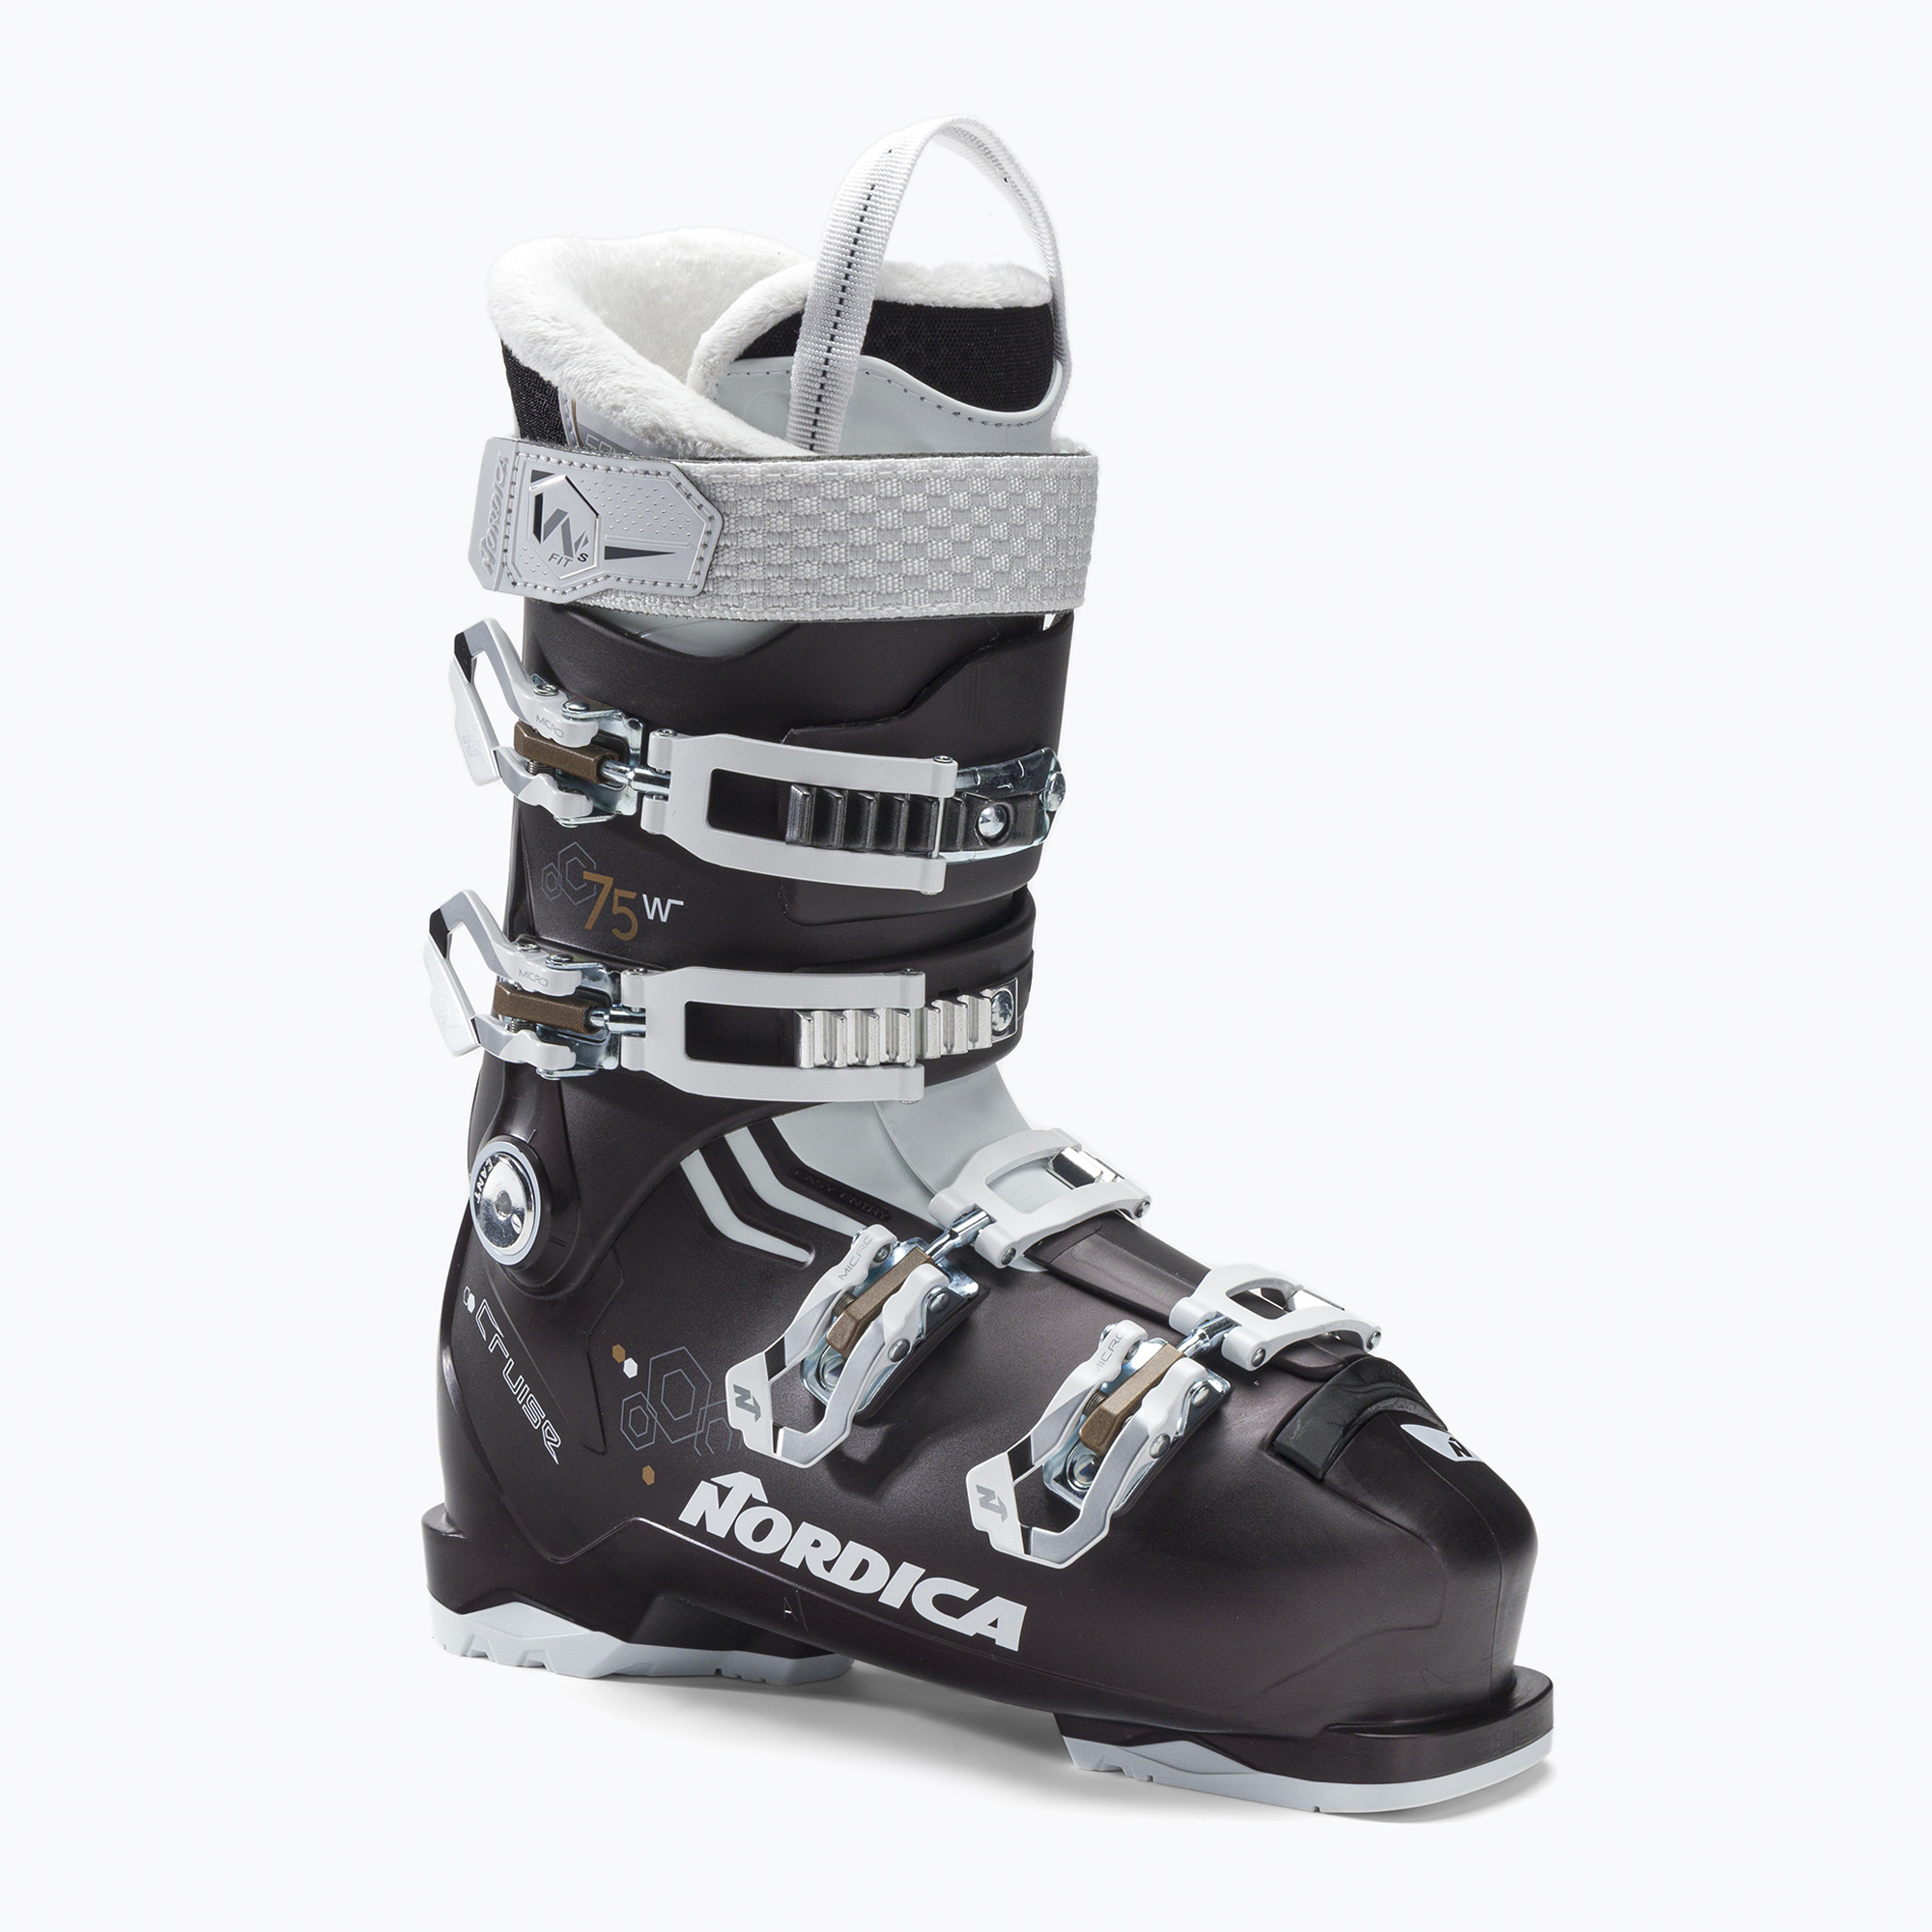 Dámske lyžiarske topánky Nordica THE CRUISE 75 W black 05065200 5R7